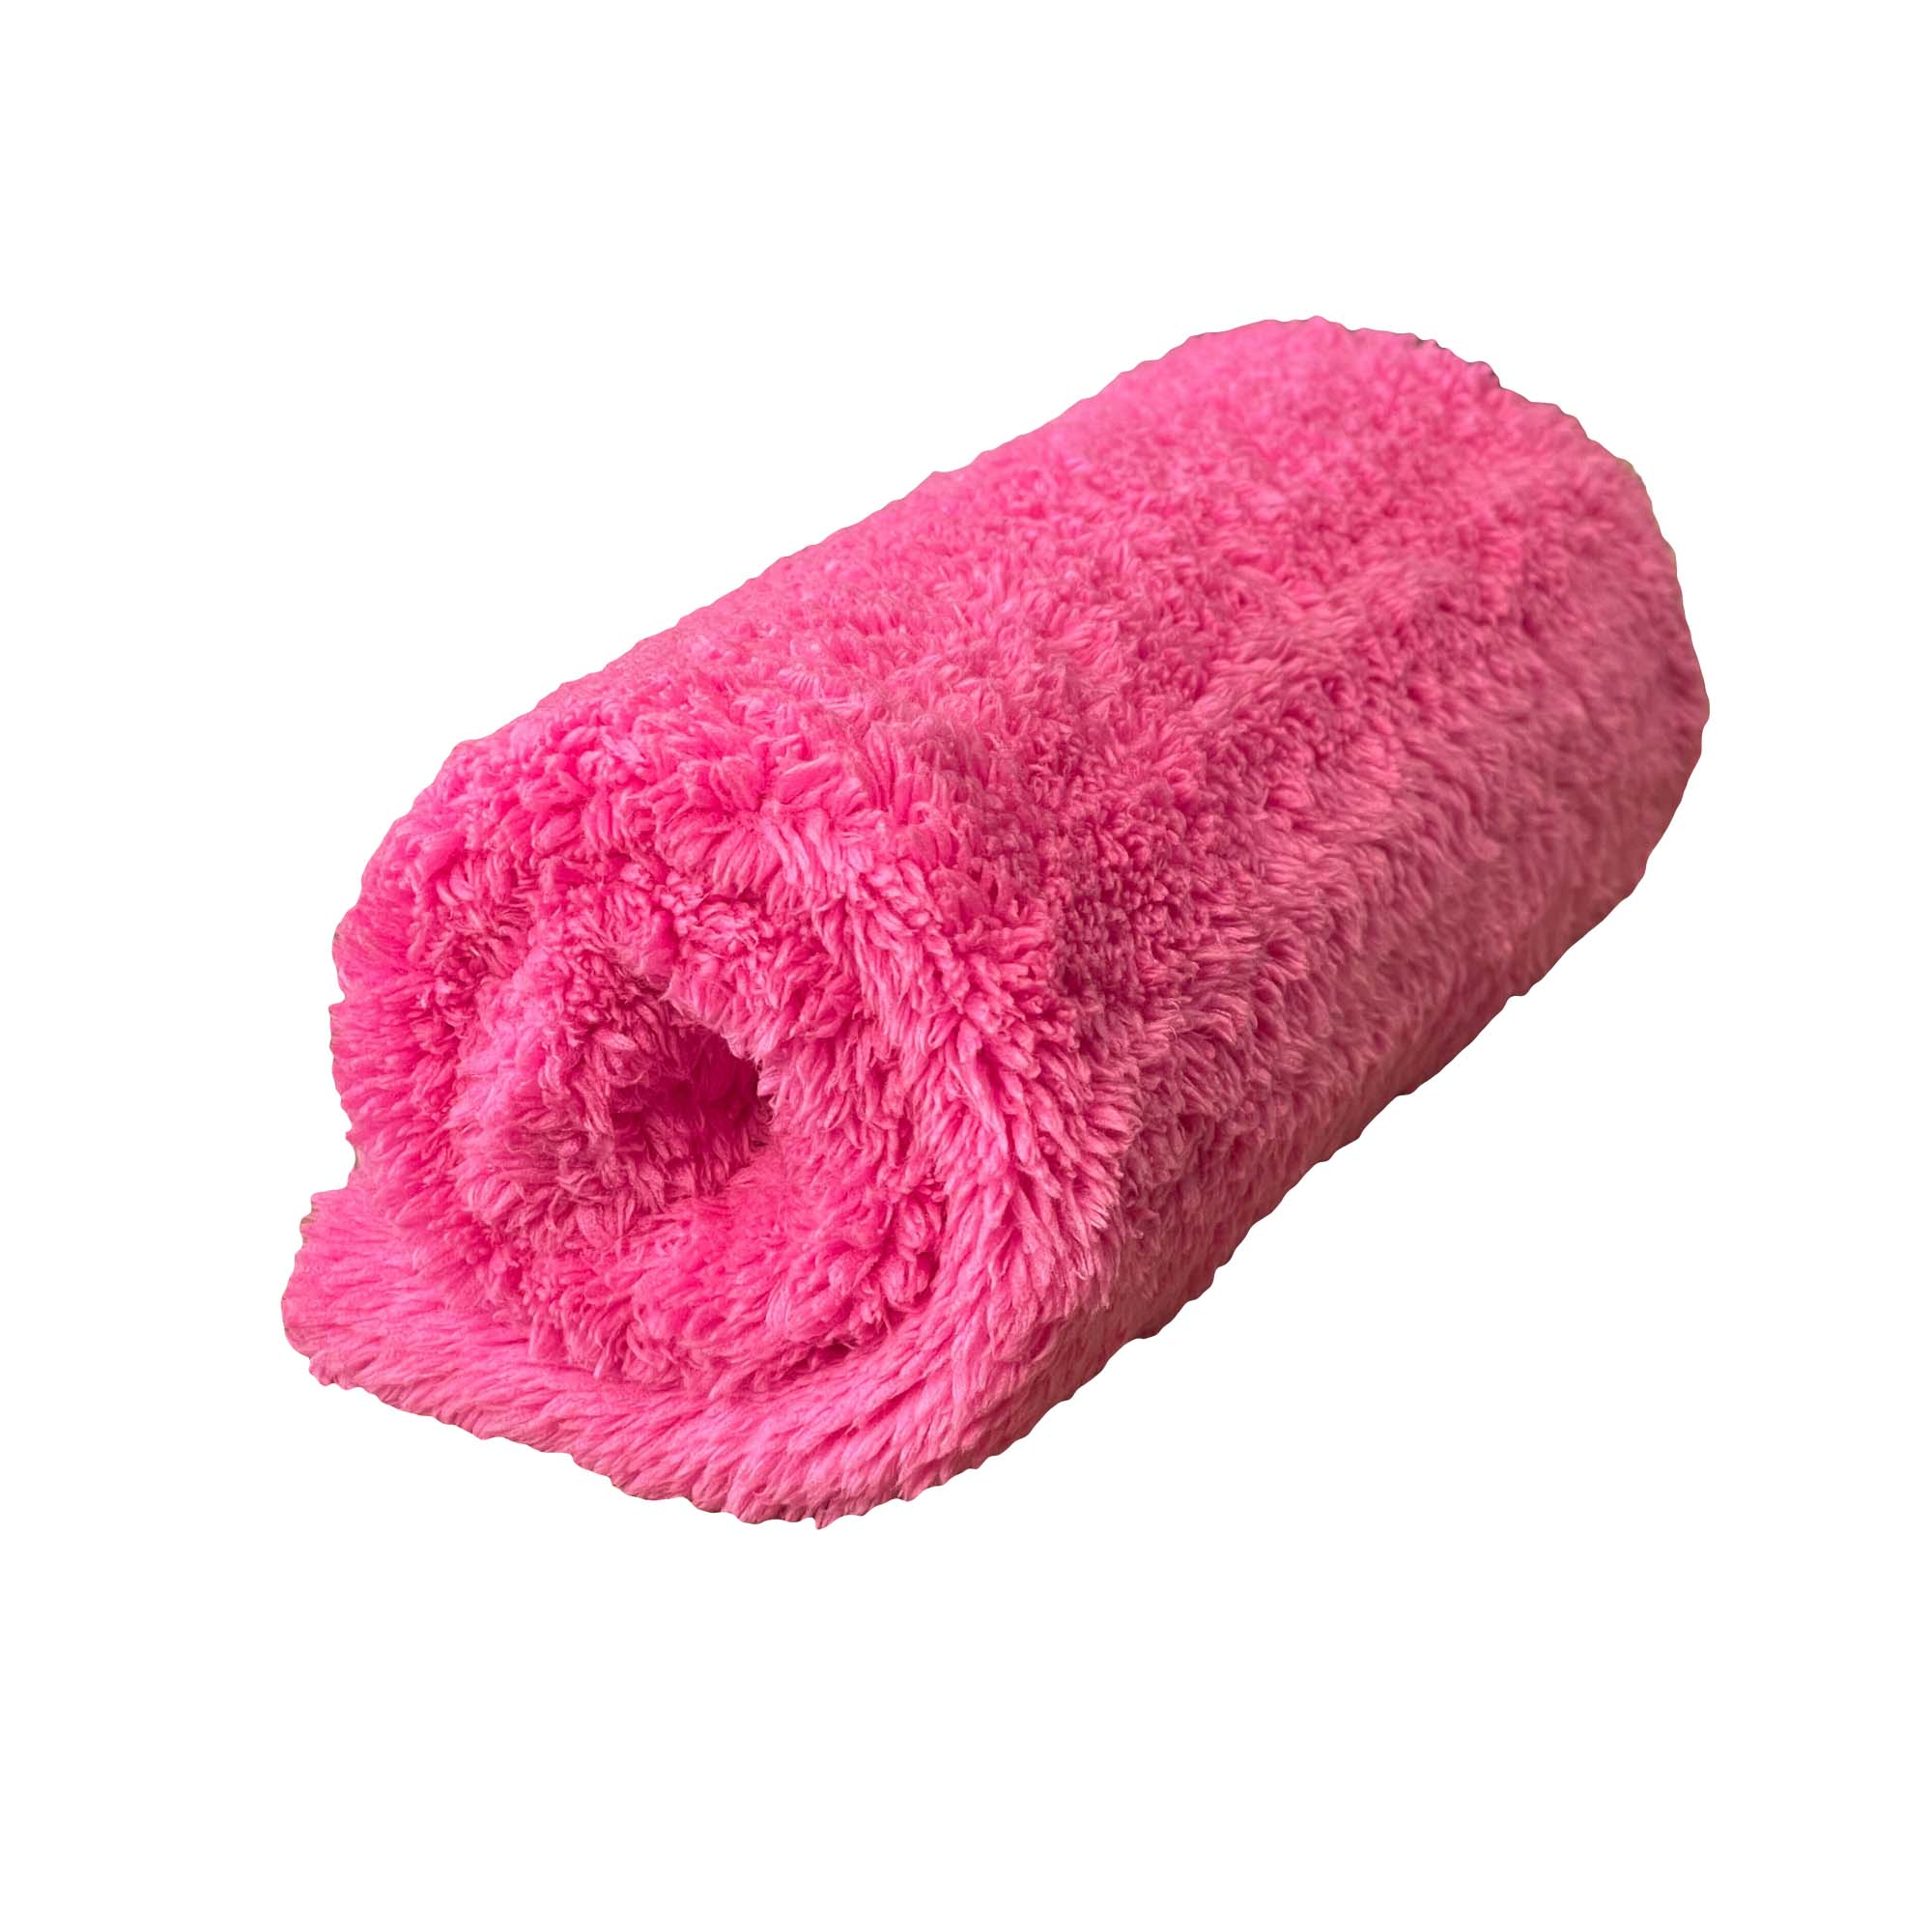 Microfiber Coral fleece towel